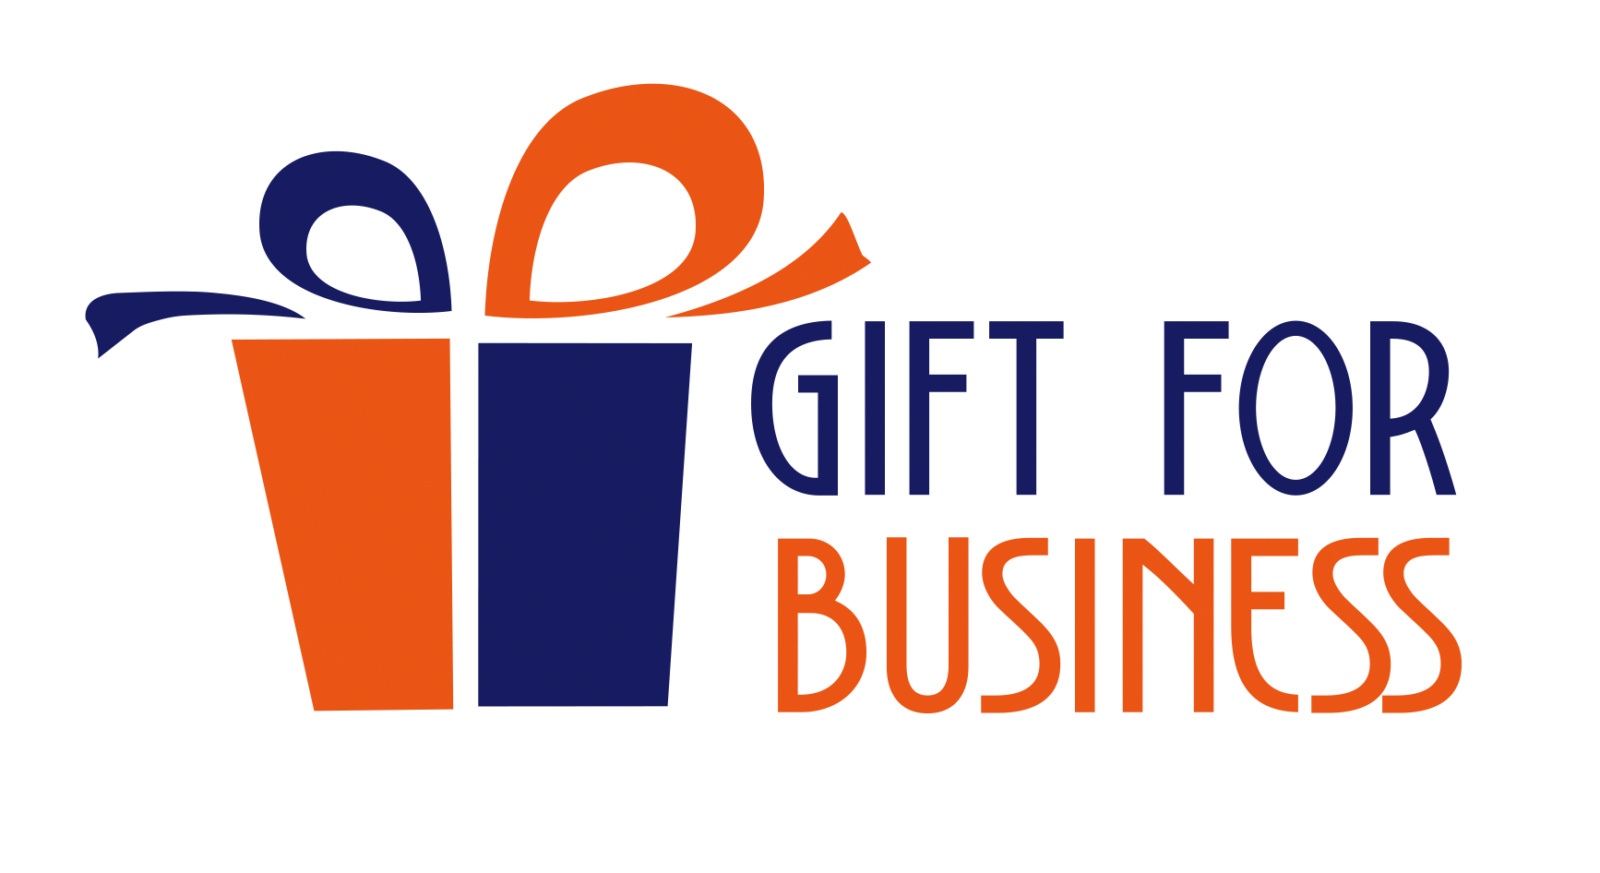 Indian Gifts Portal Logo